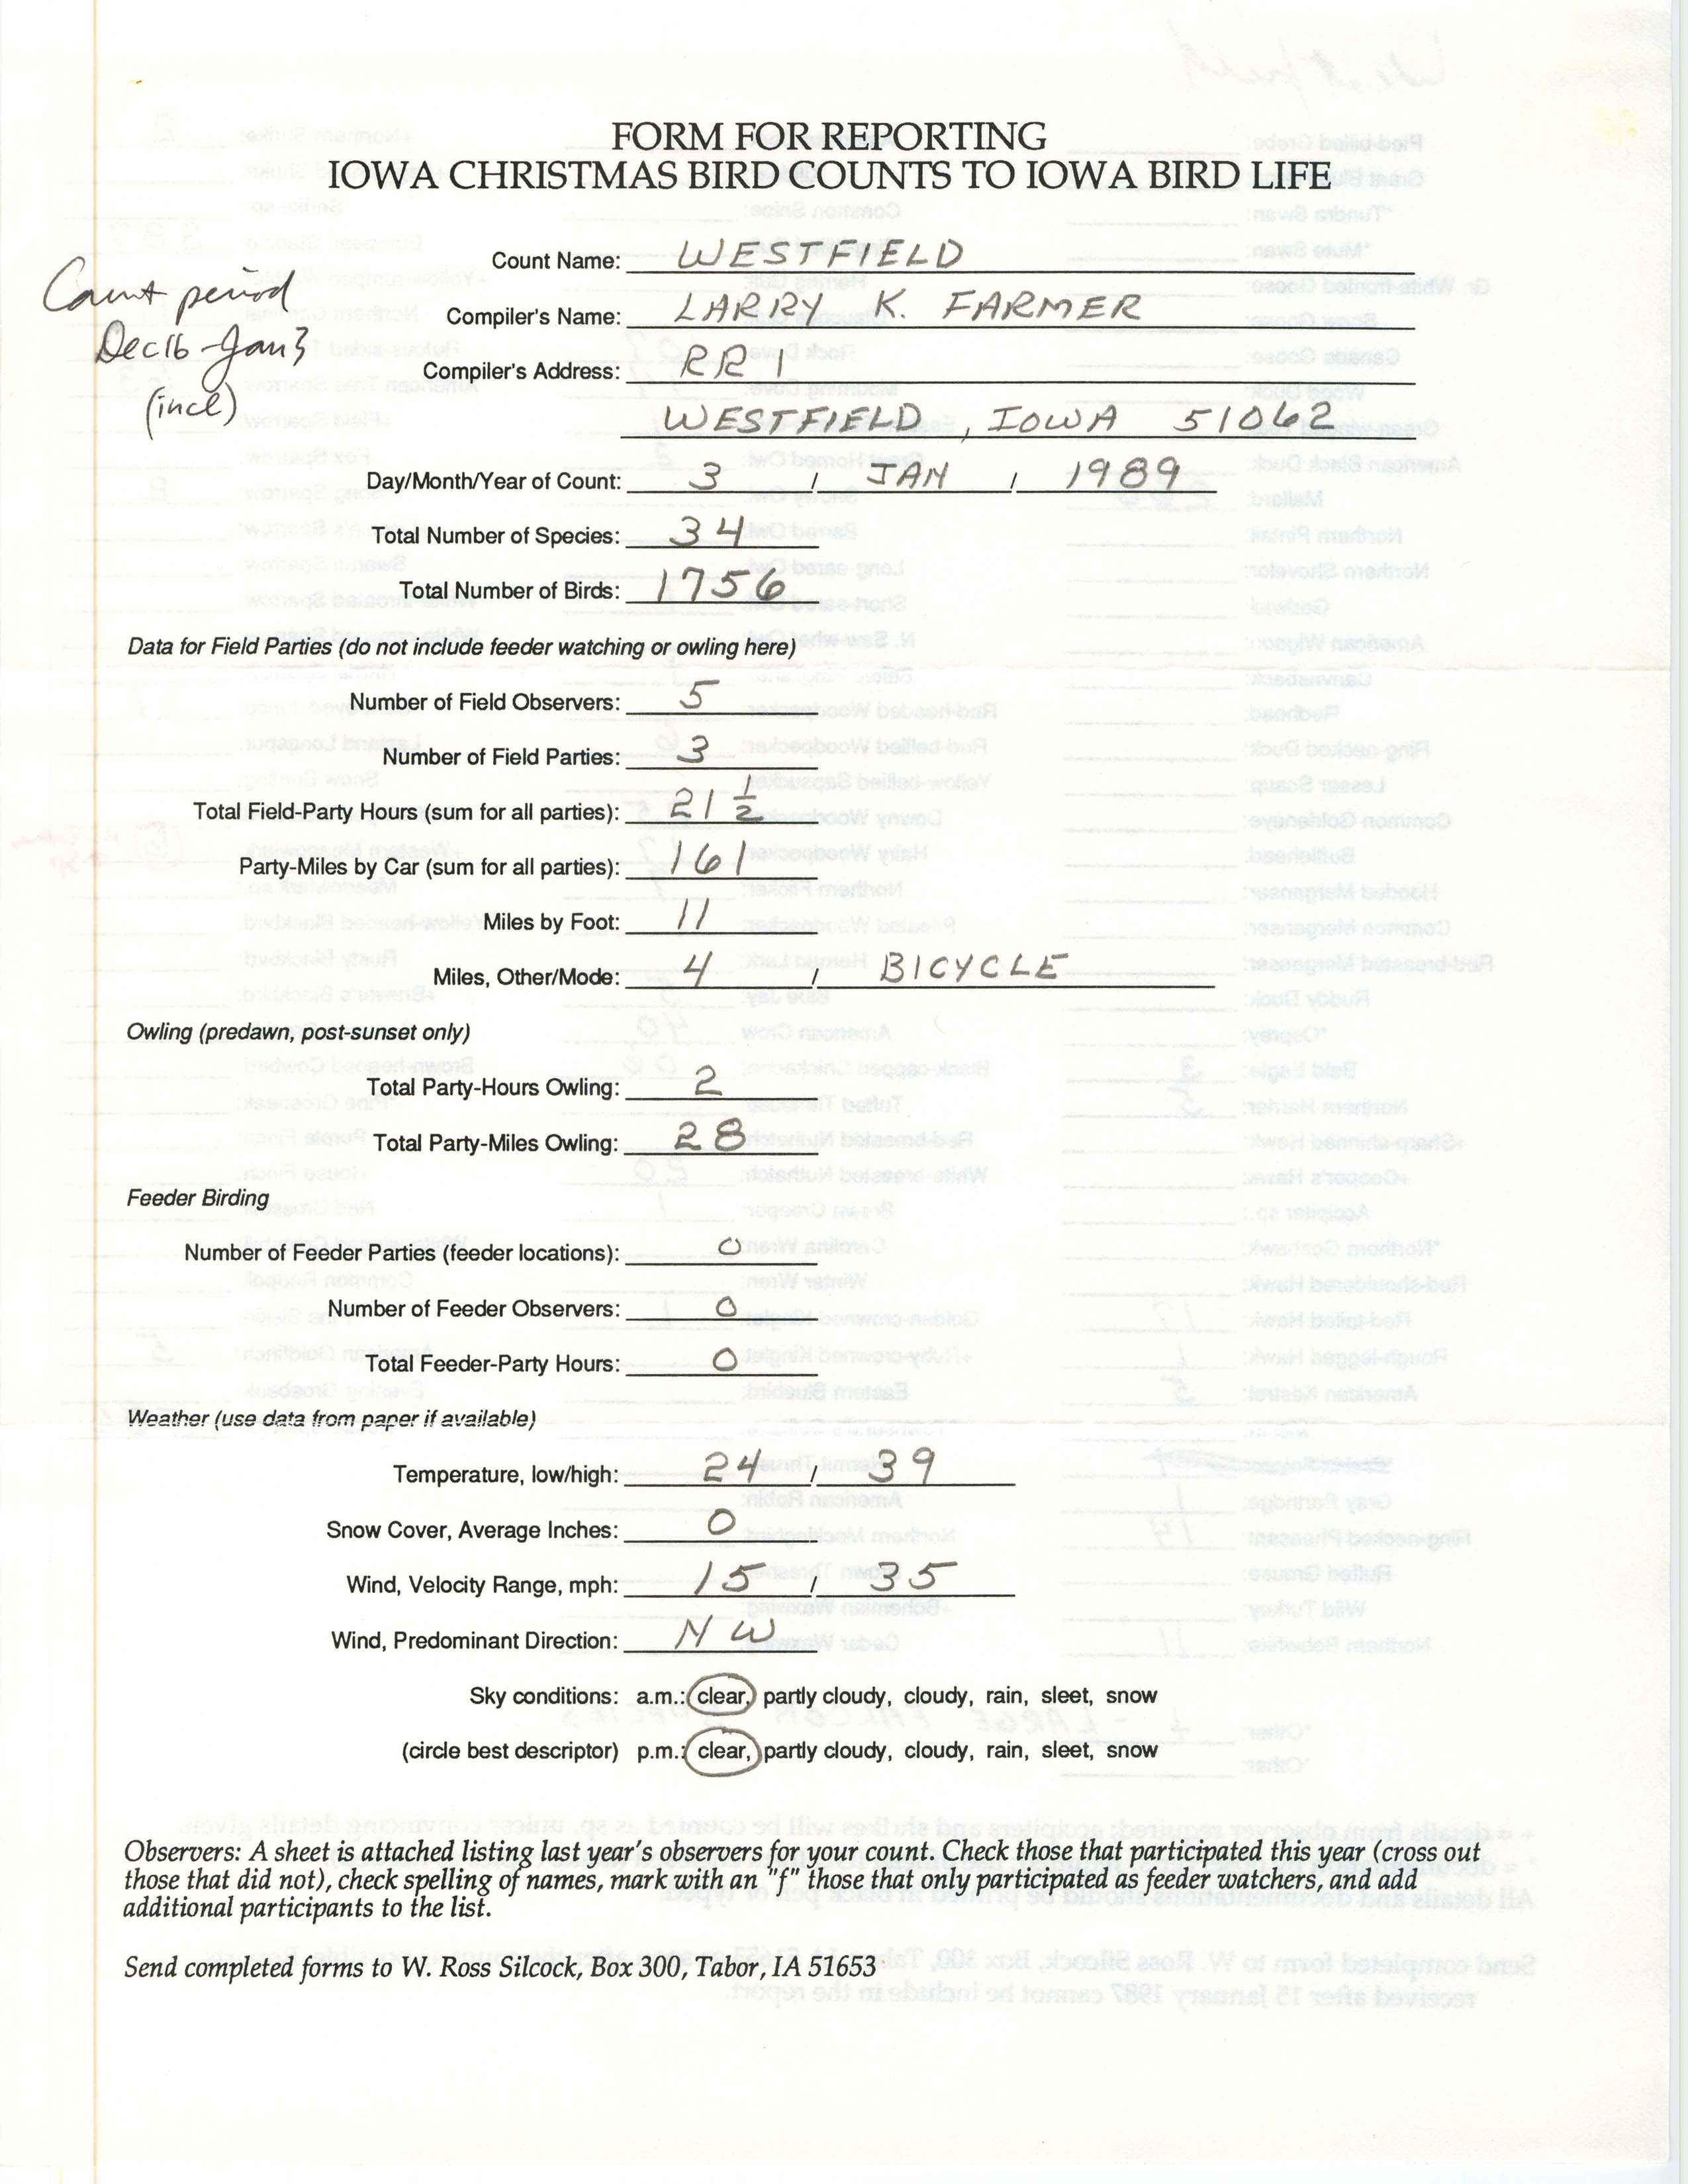 Form for reporting Iowa Christmas bird counts to Iowa Bird Life, Larry Farmer, January 3, 1989